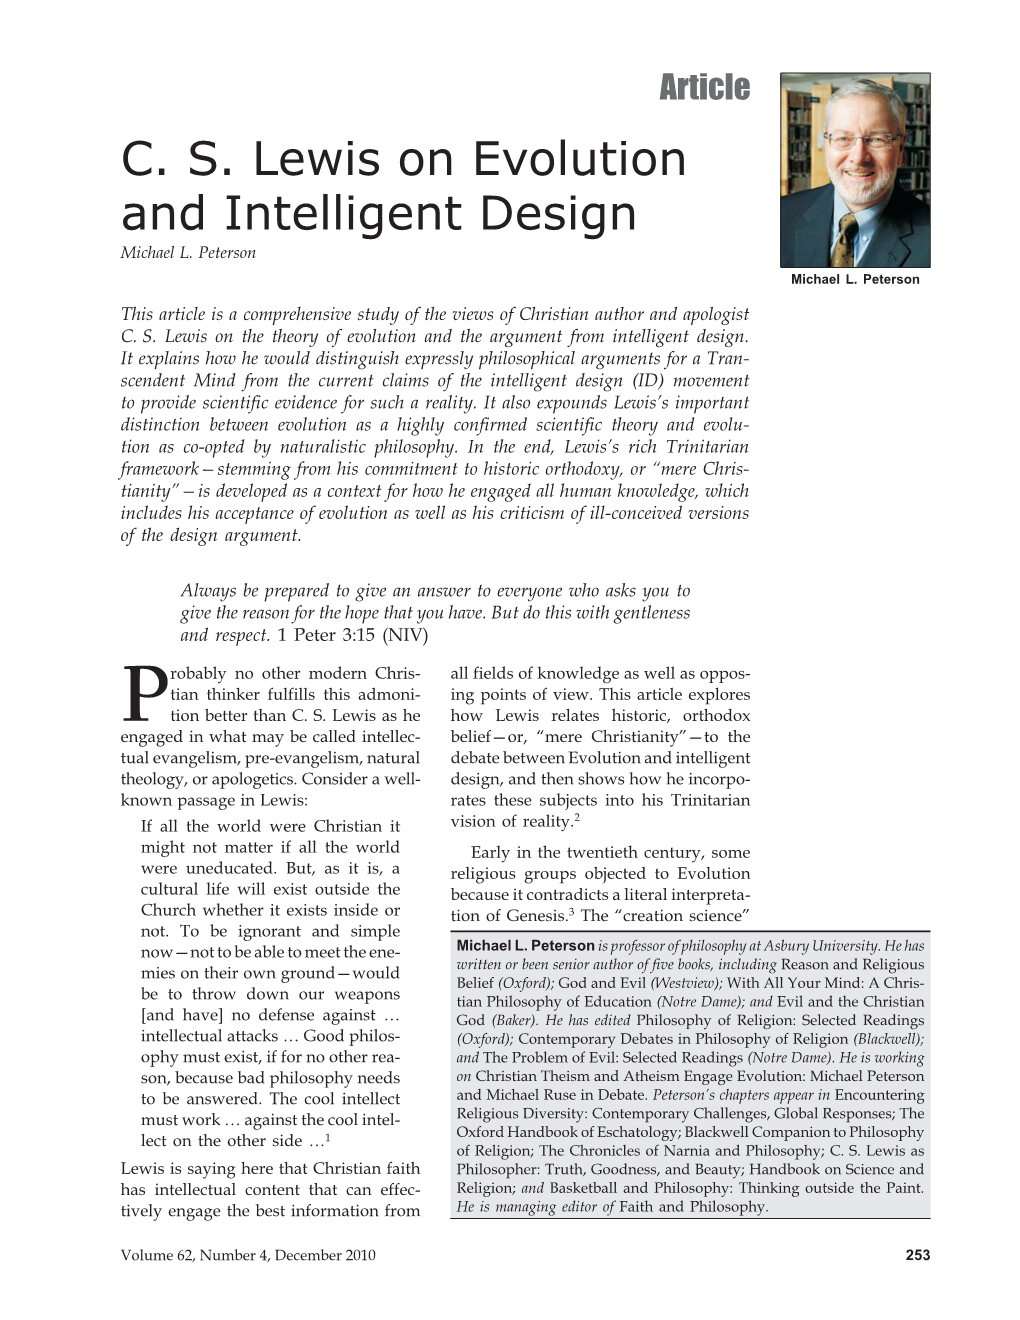 C. S. Lewis on Evolution and Intelligent Design Michael L